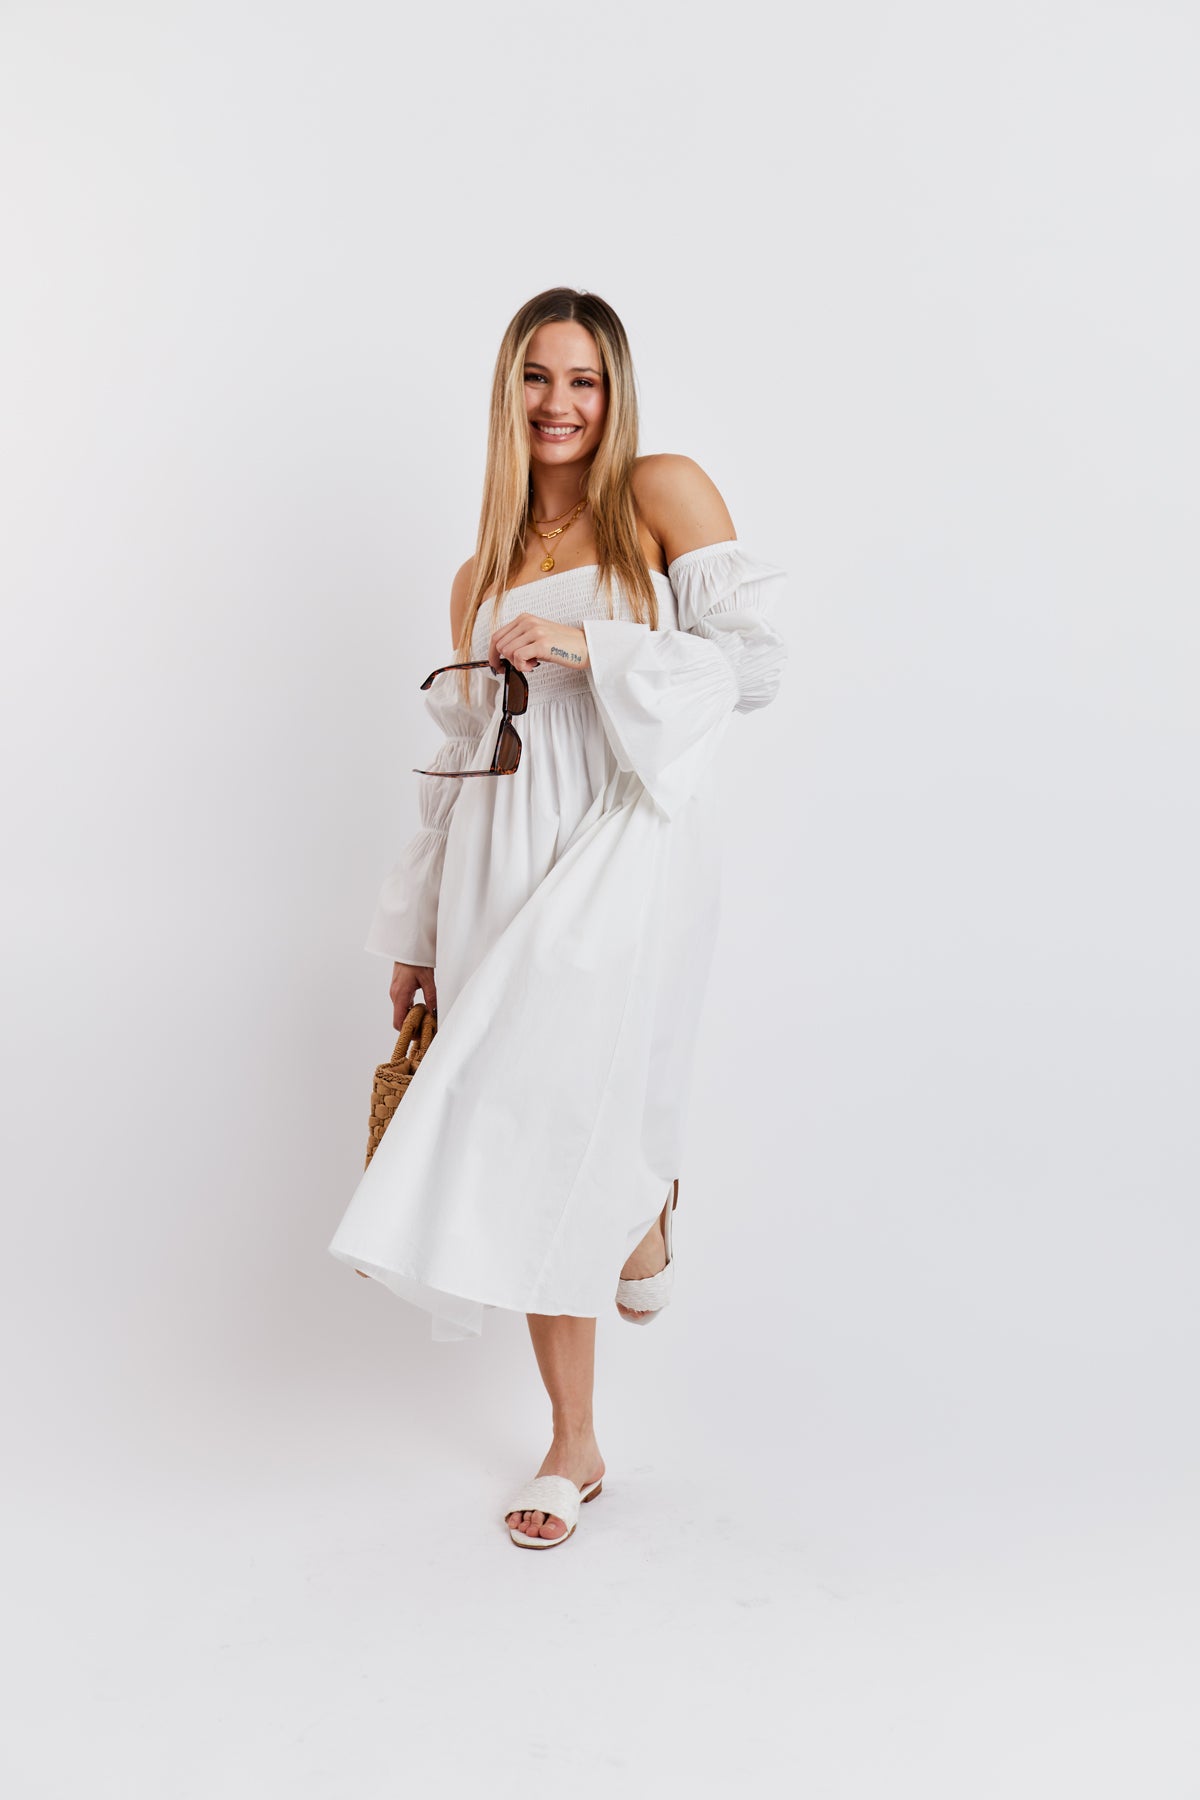 MAGNOLIA WHITE MAXI DRESS